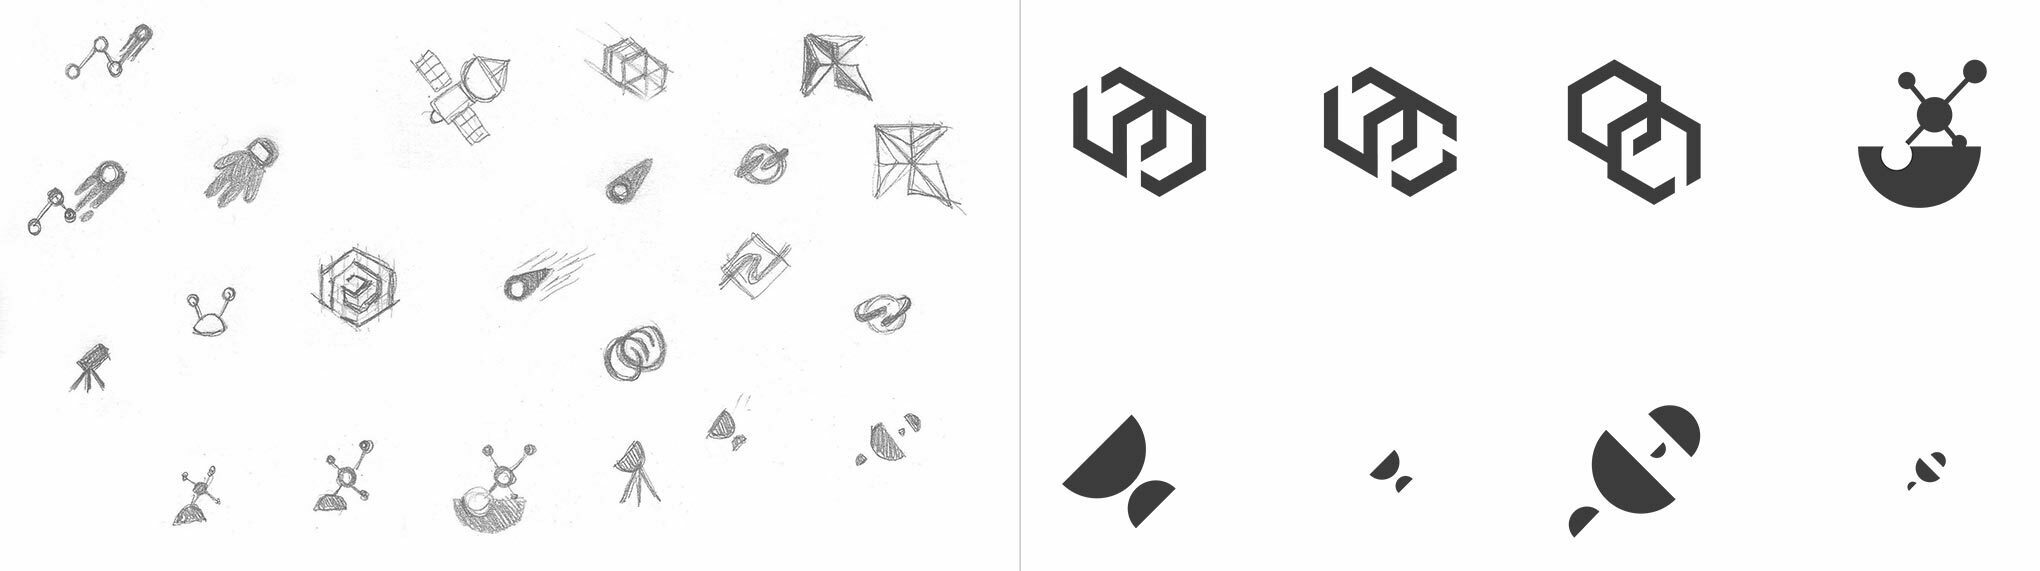 Sketches & concept exploration for the ProductSpace logo design